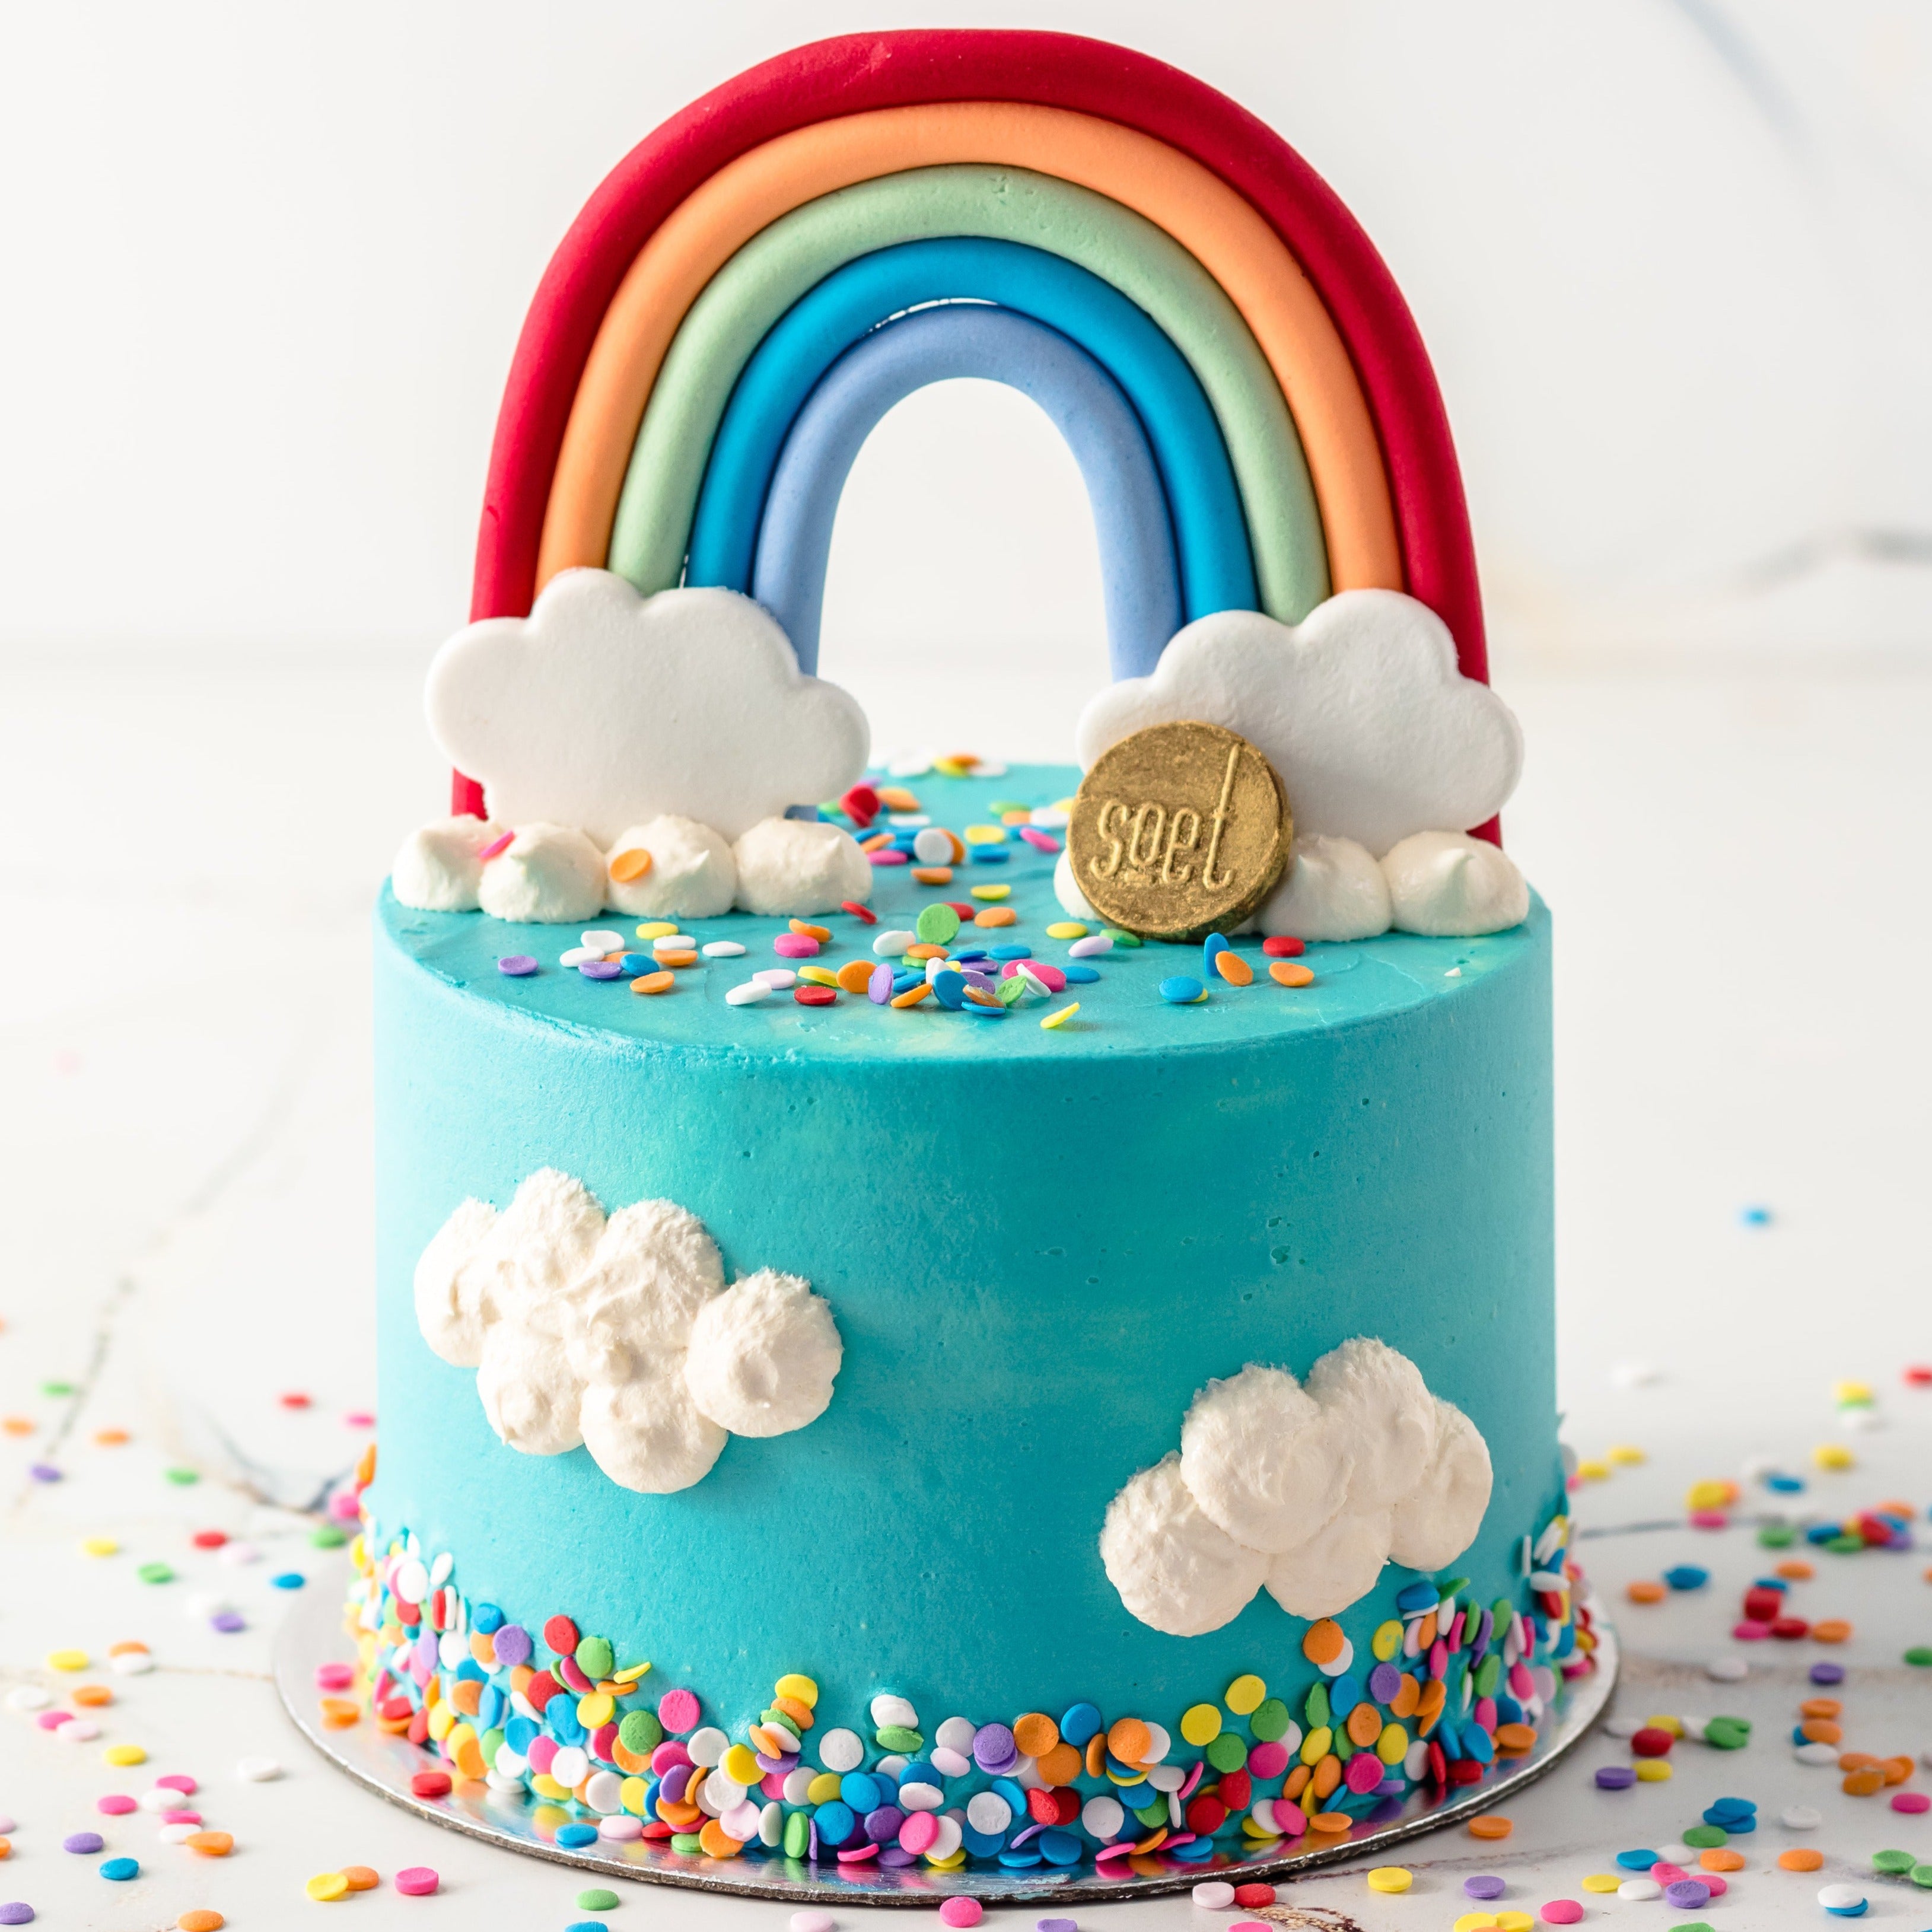 Birthday Cakes - The Baking Factory